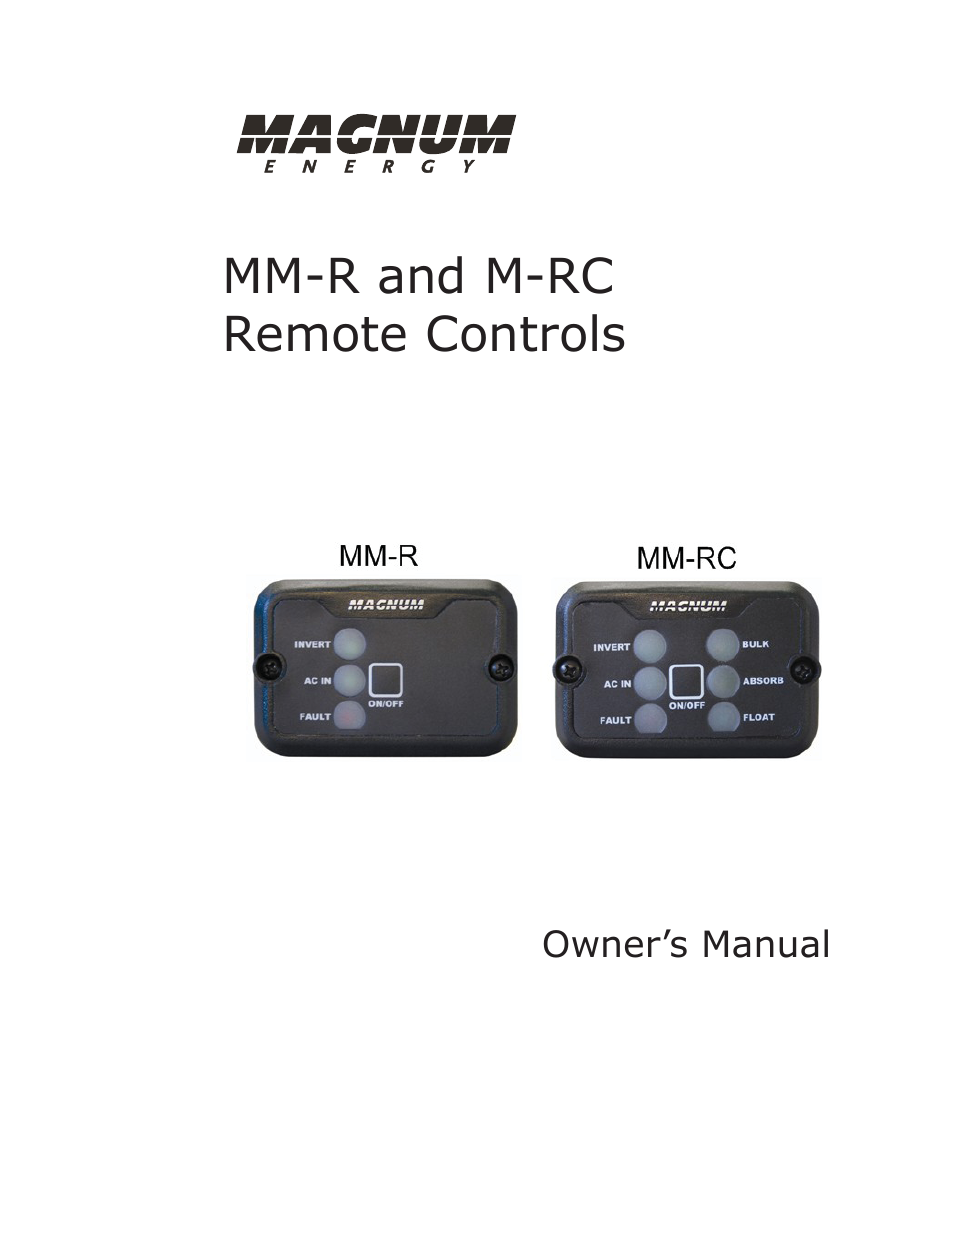 MM-RC Remote